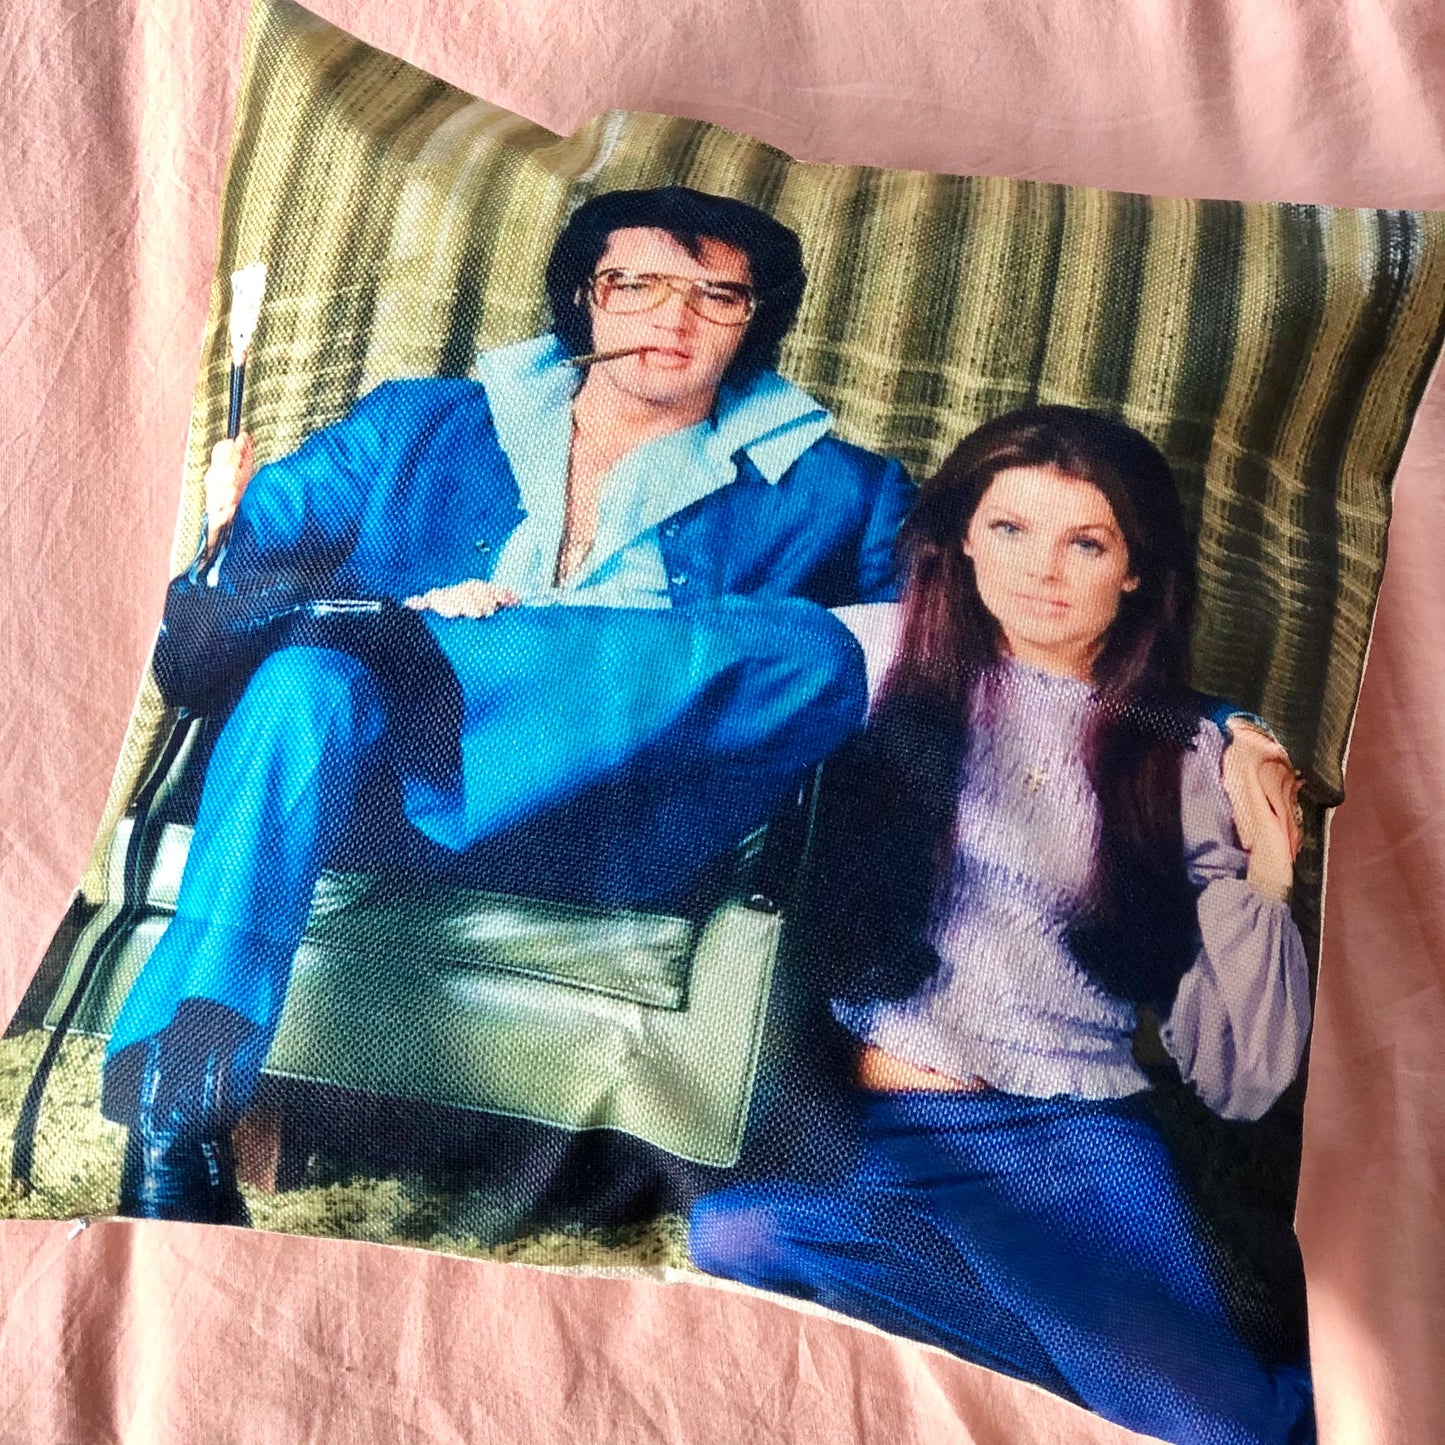 The king Elvis & Priscilla music retro pillow cushion cover